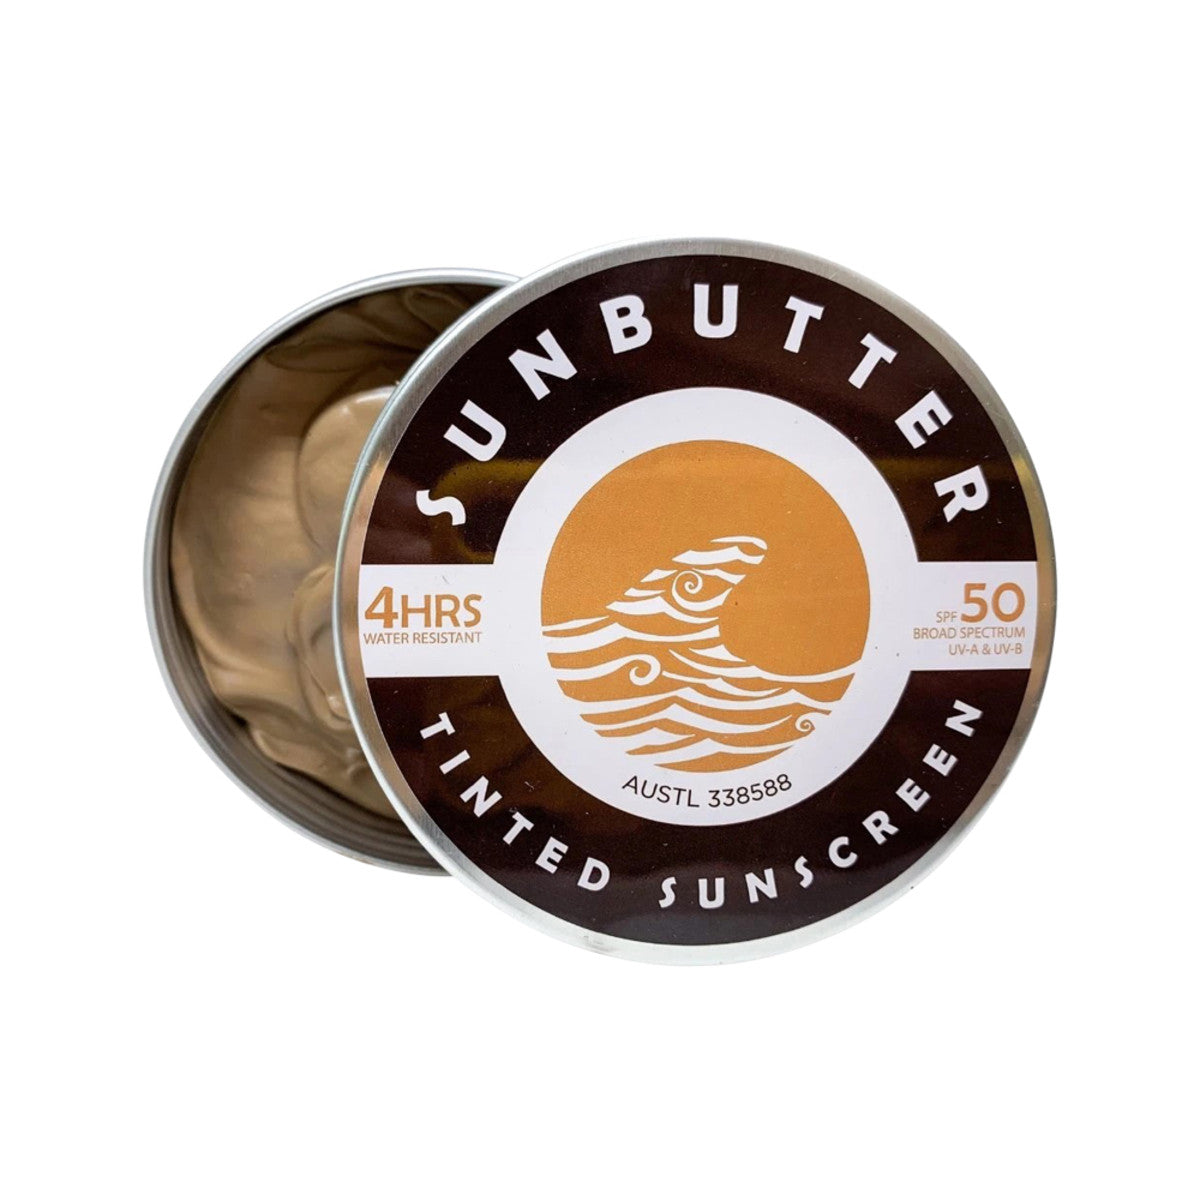 SunButter Skincare Sunscreen Tinted SPF 50 Tin 100g